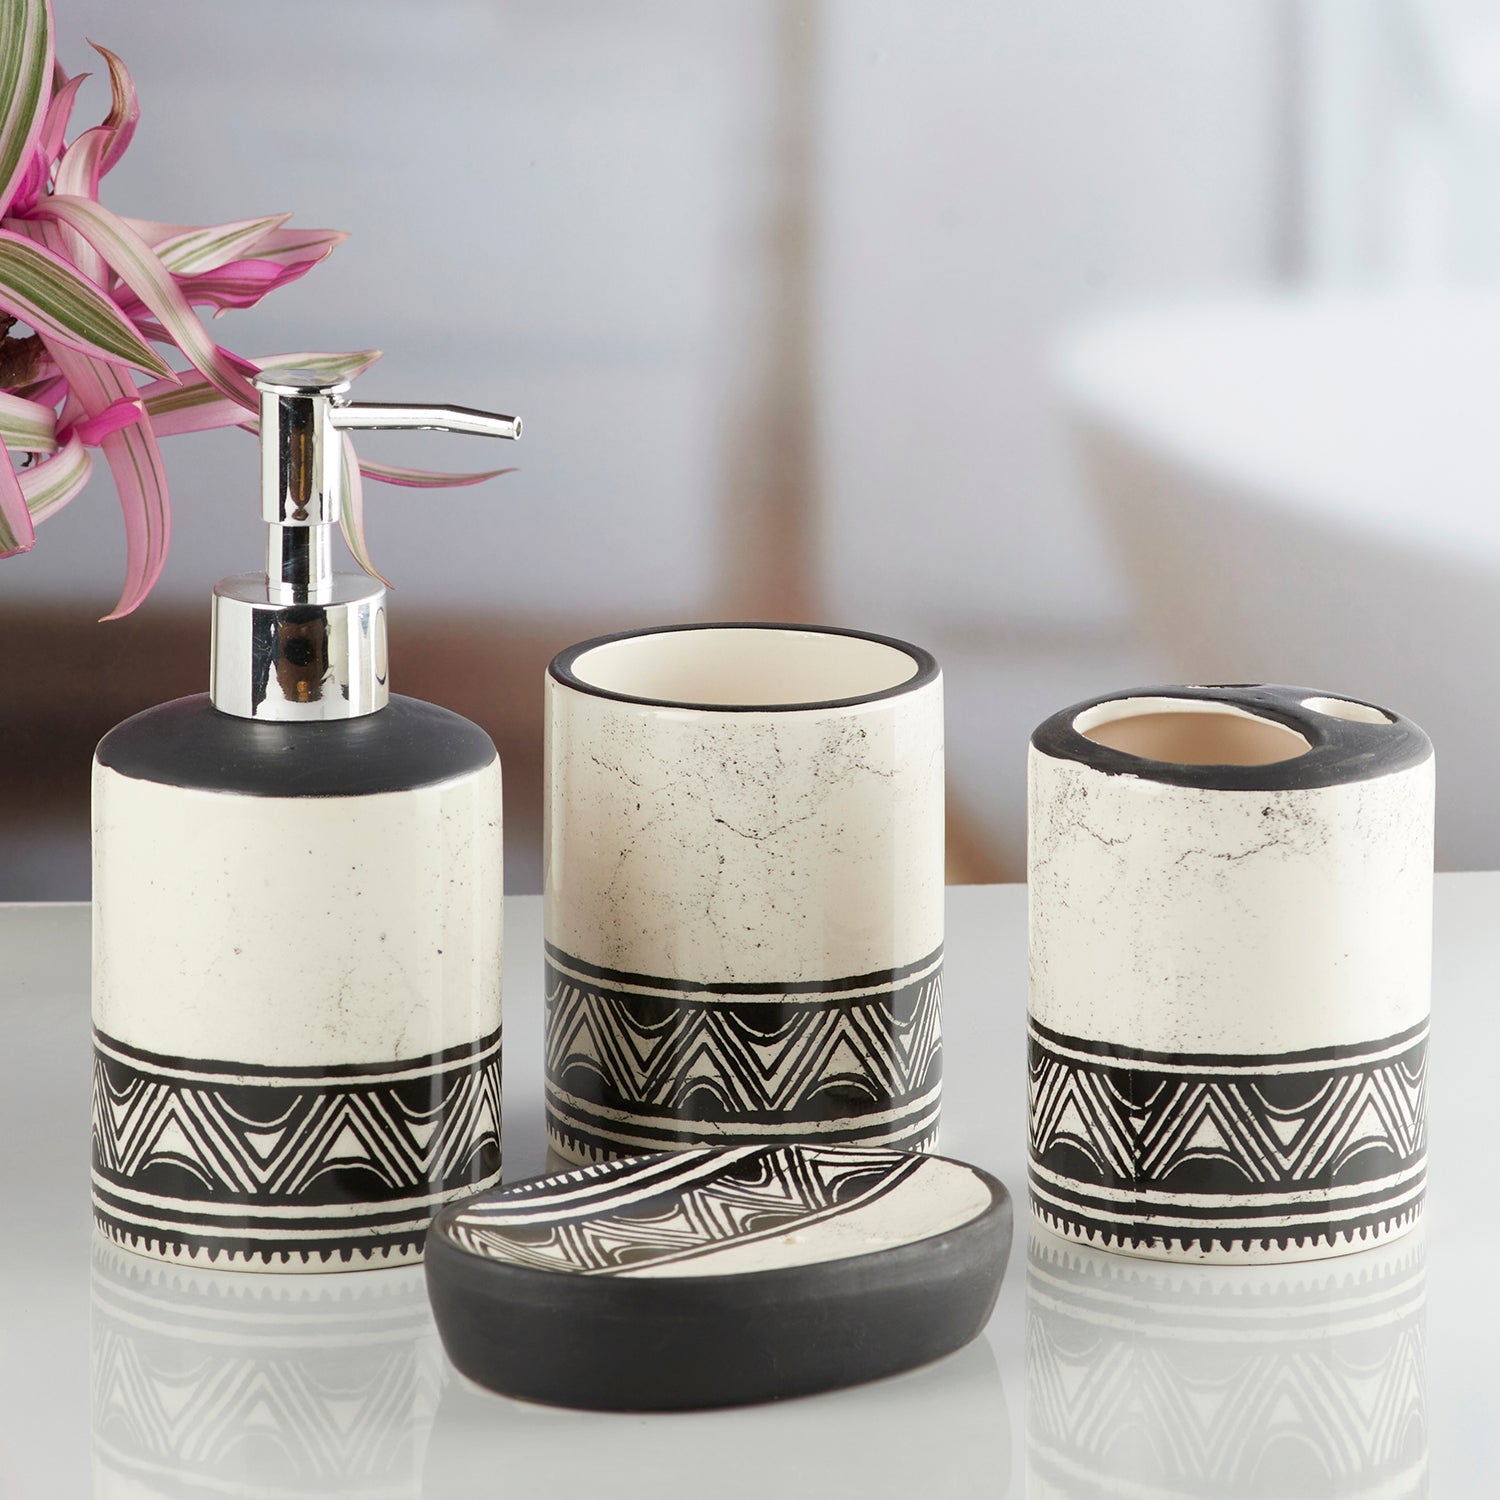 Ceramic Bathroom Accessories Set of 4 Bath Set with Soap Dispenser (8475)